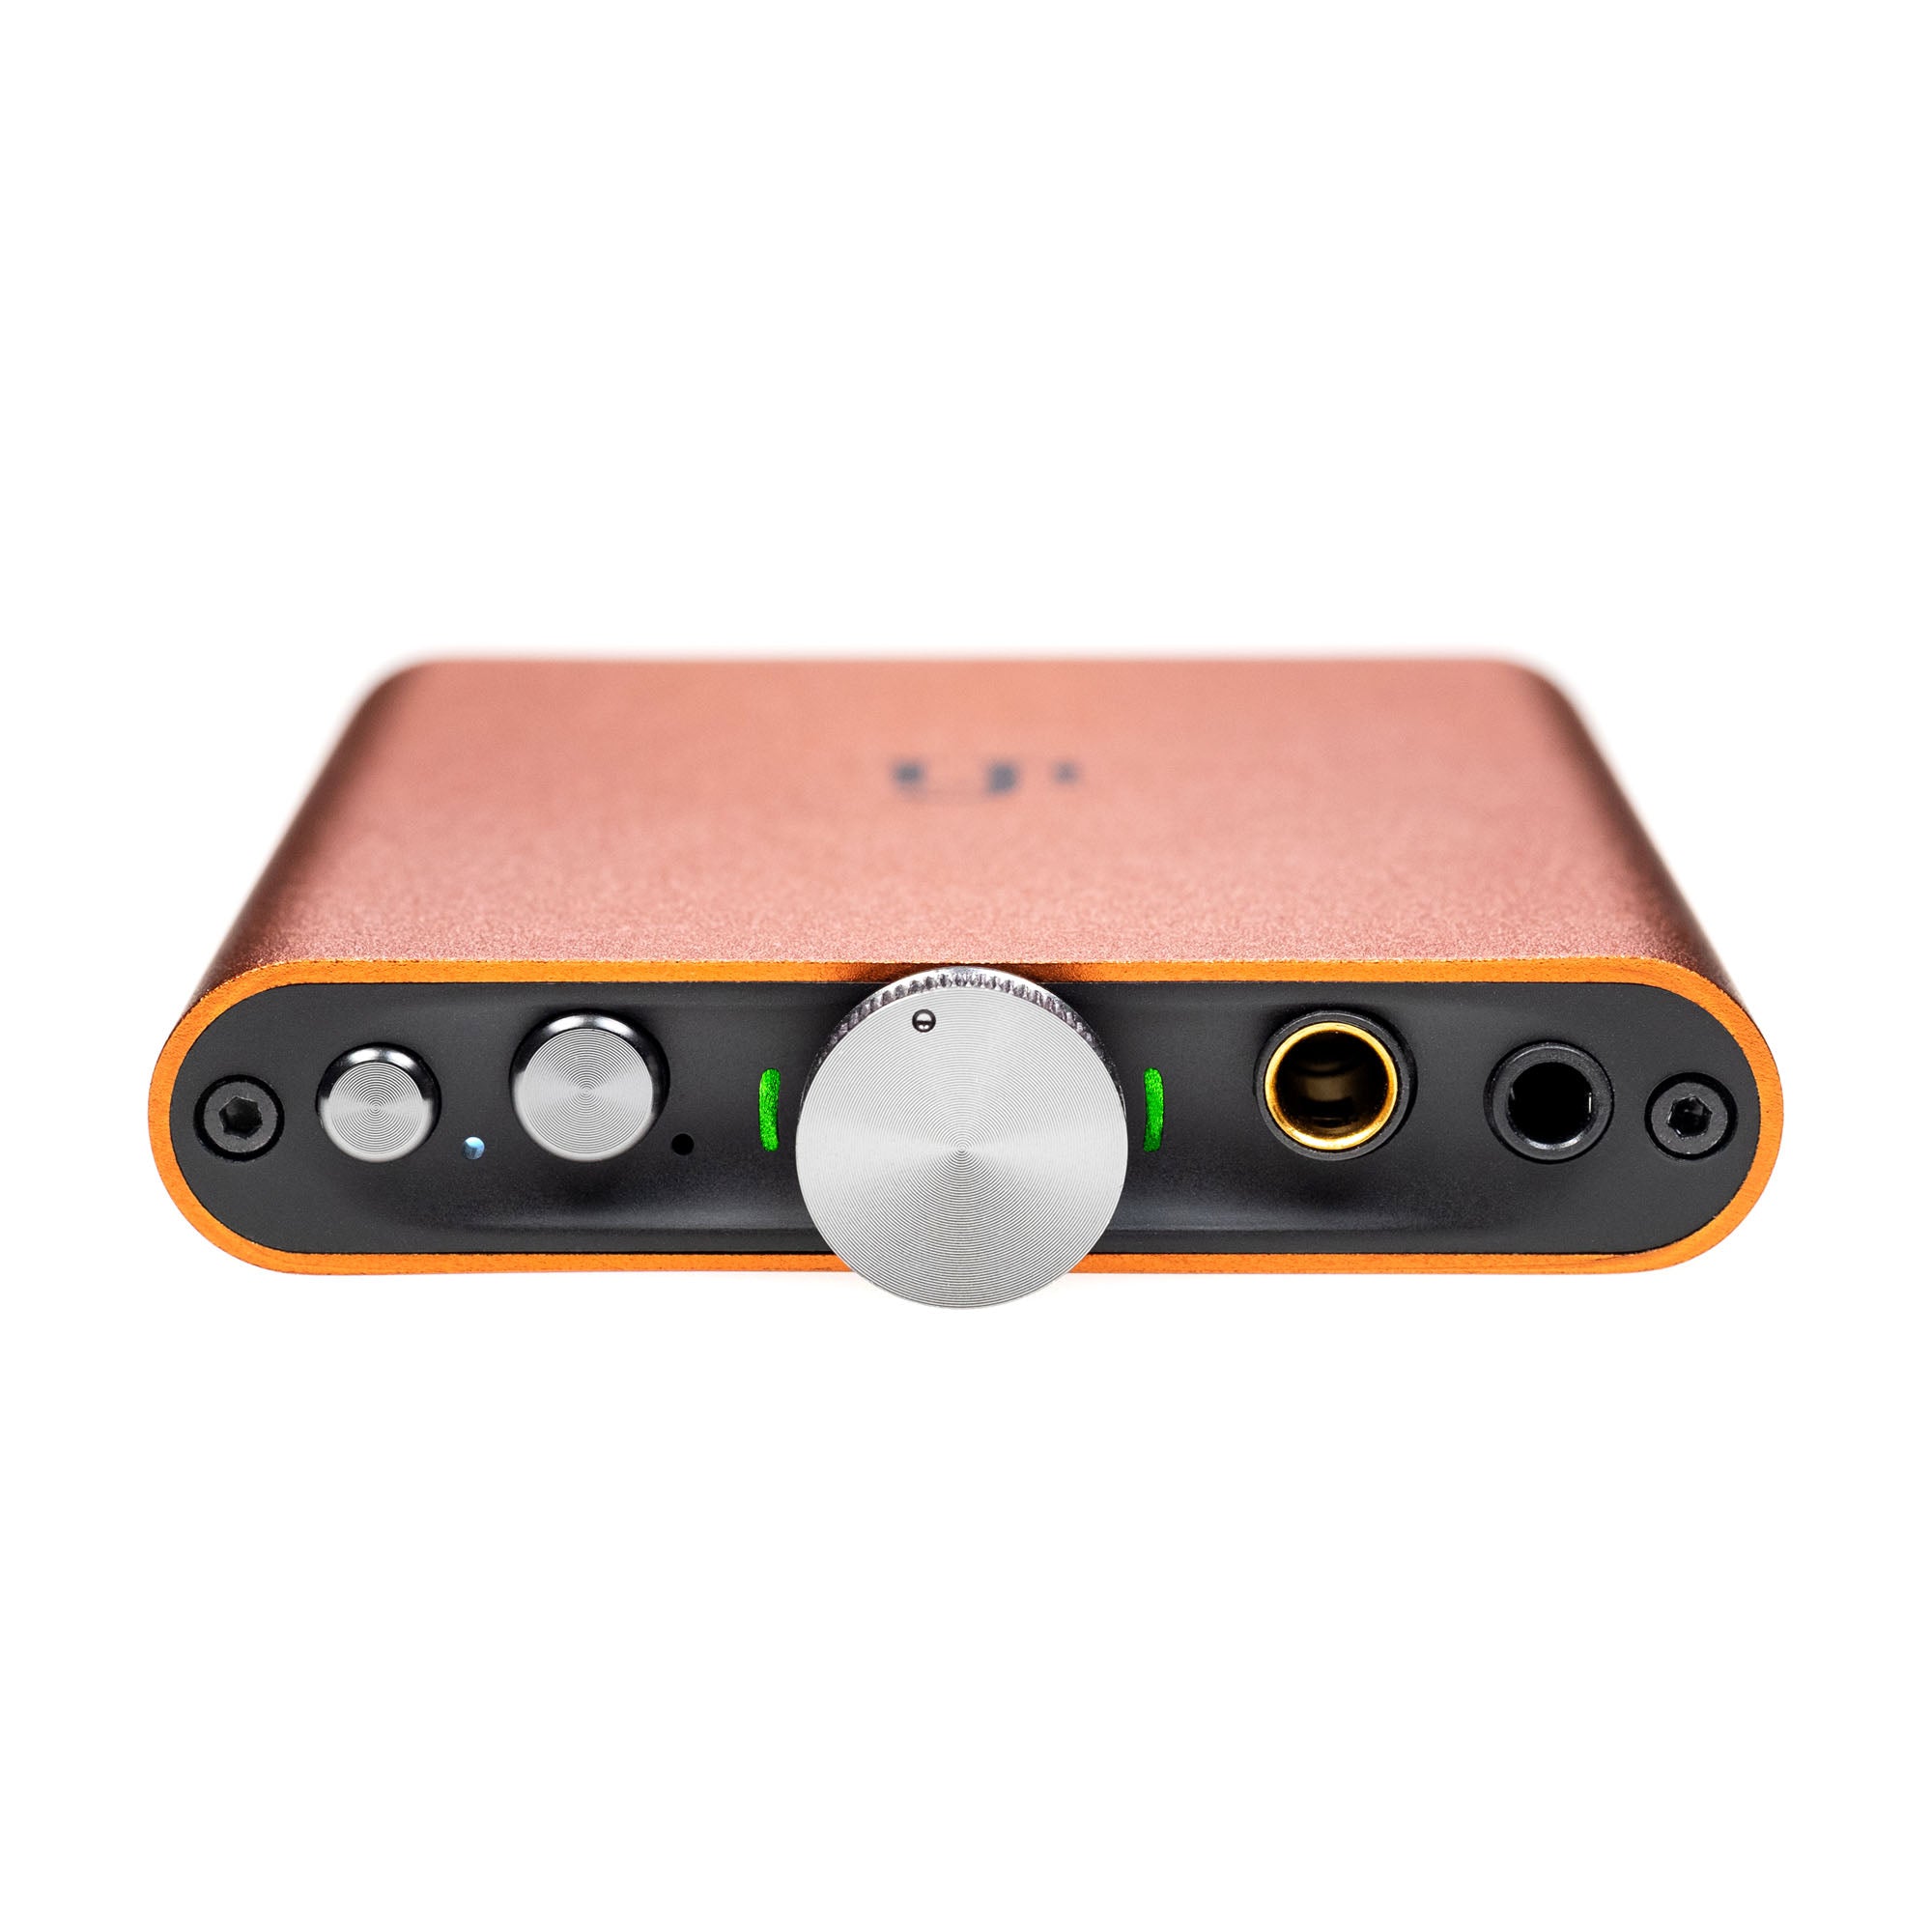 iFi Audio hip-dac2 Portable USB DAC/Amp